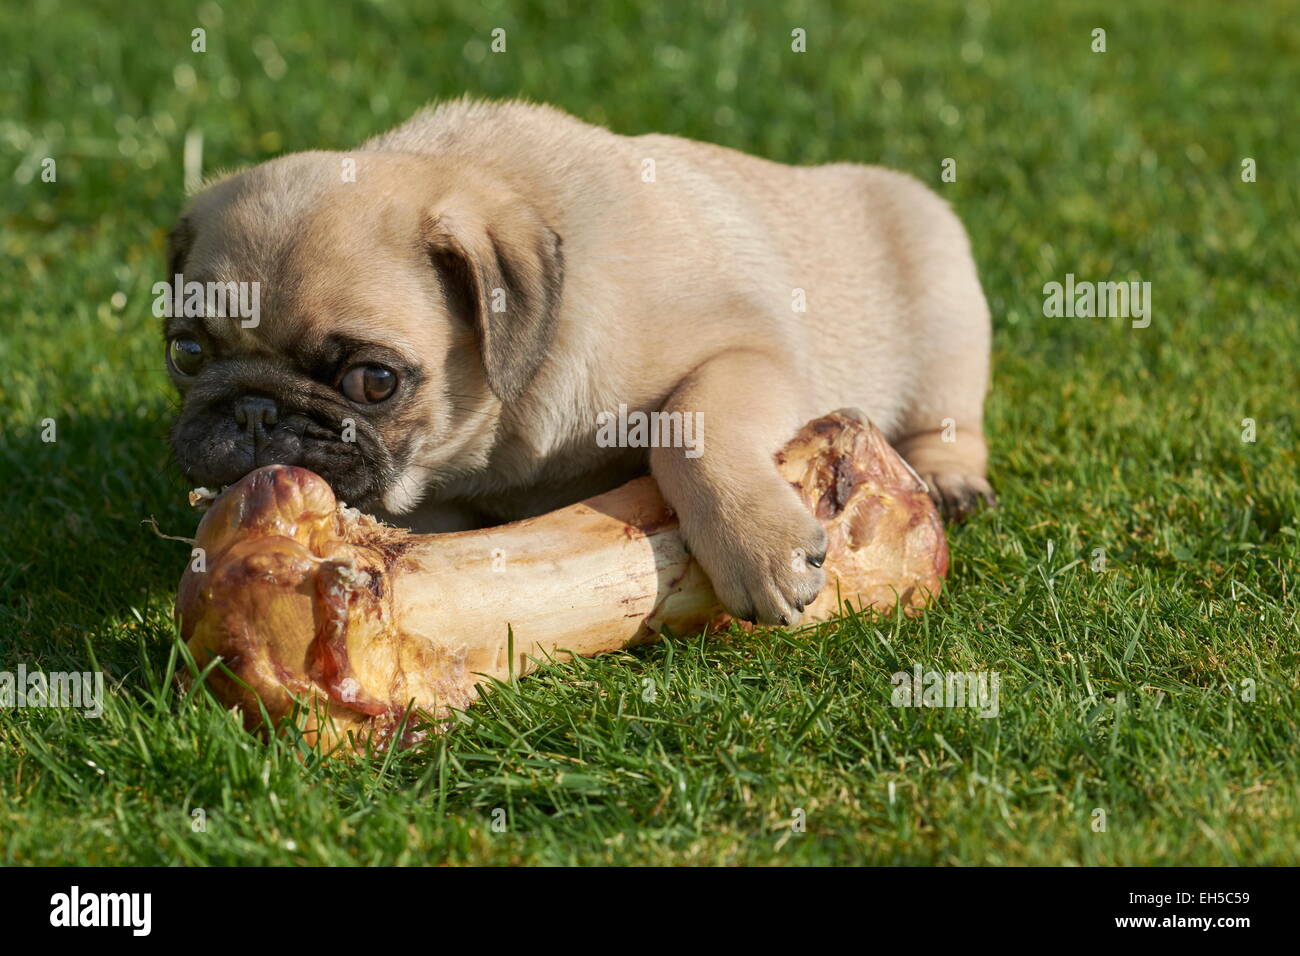 Pug puppy enjoying eating a bone Stock Photo